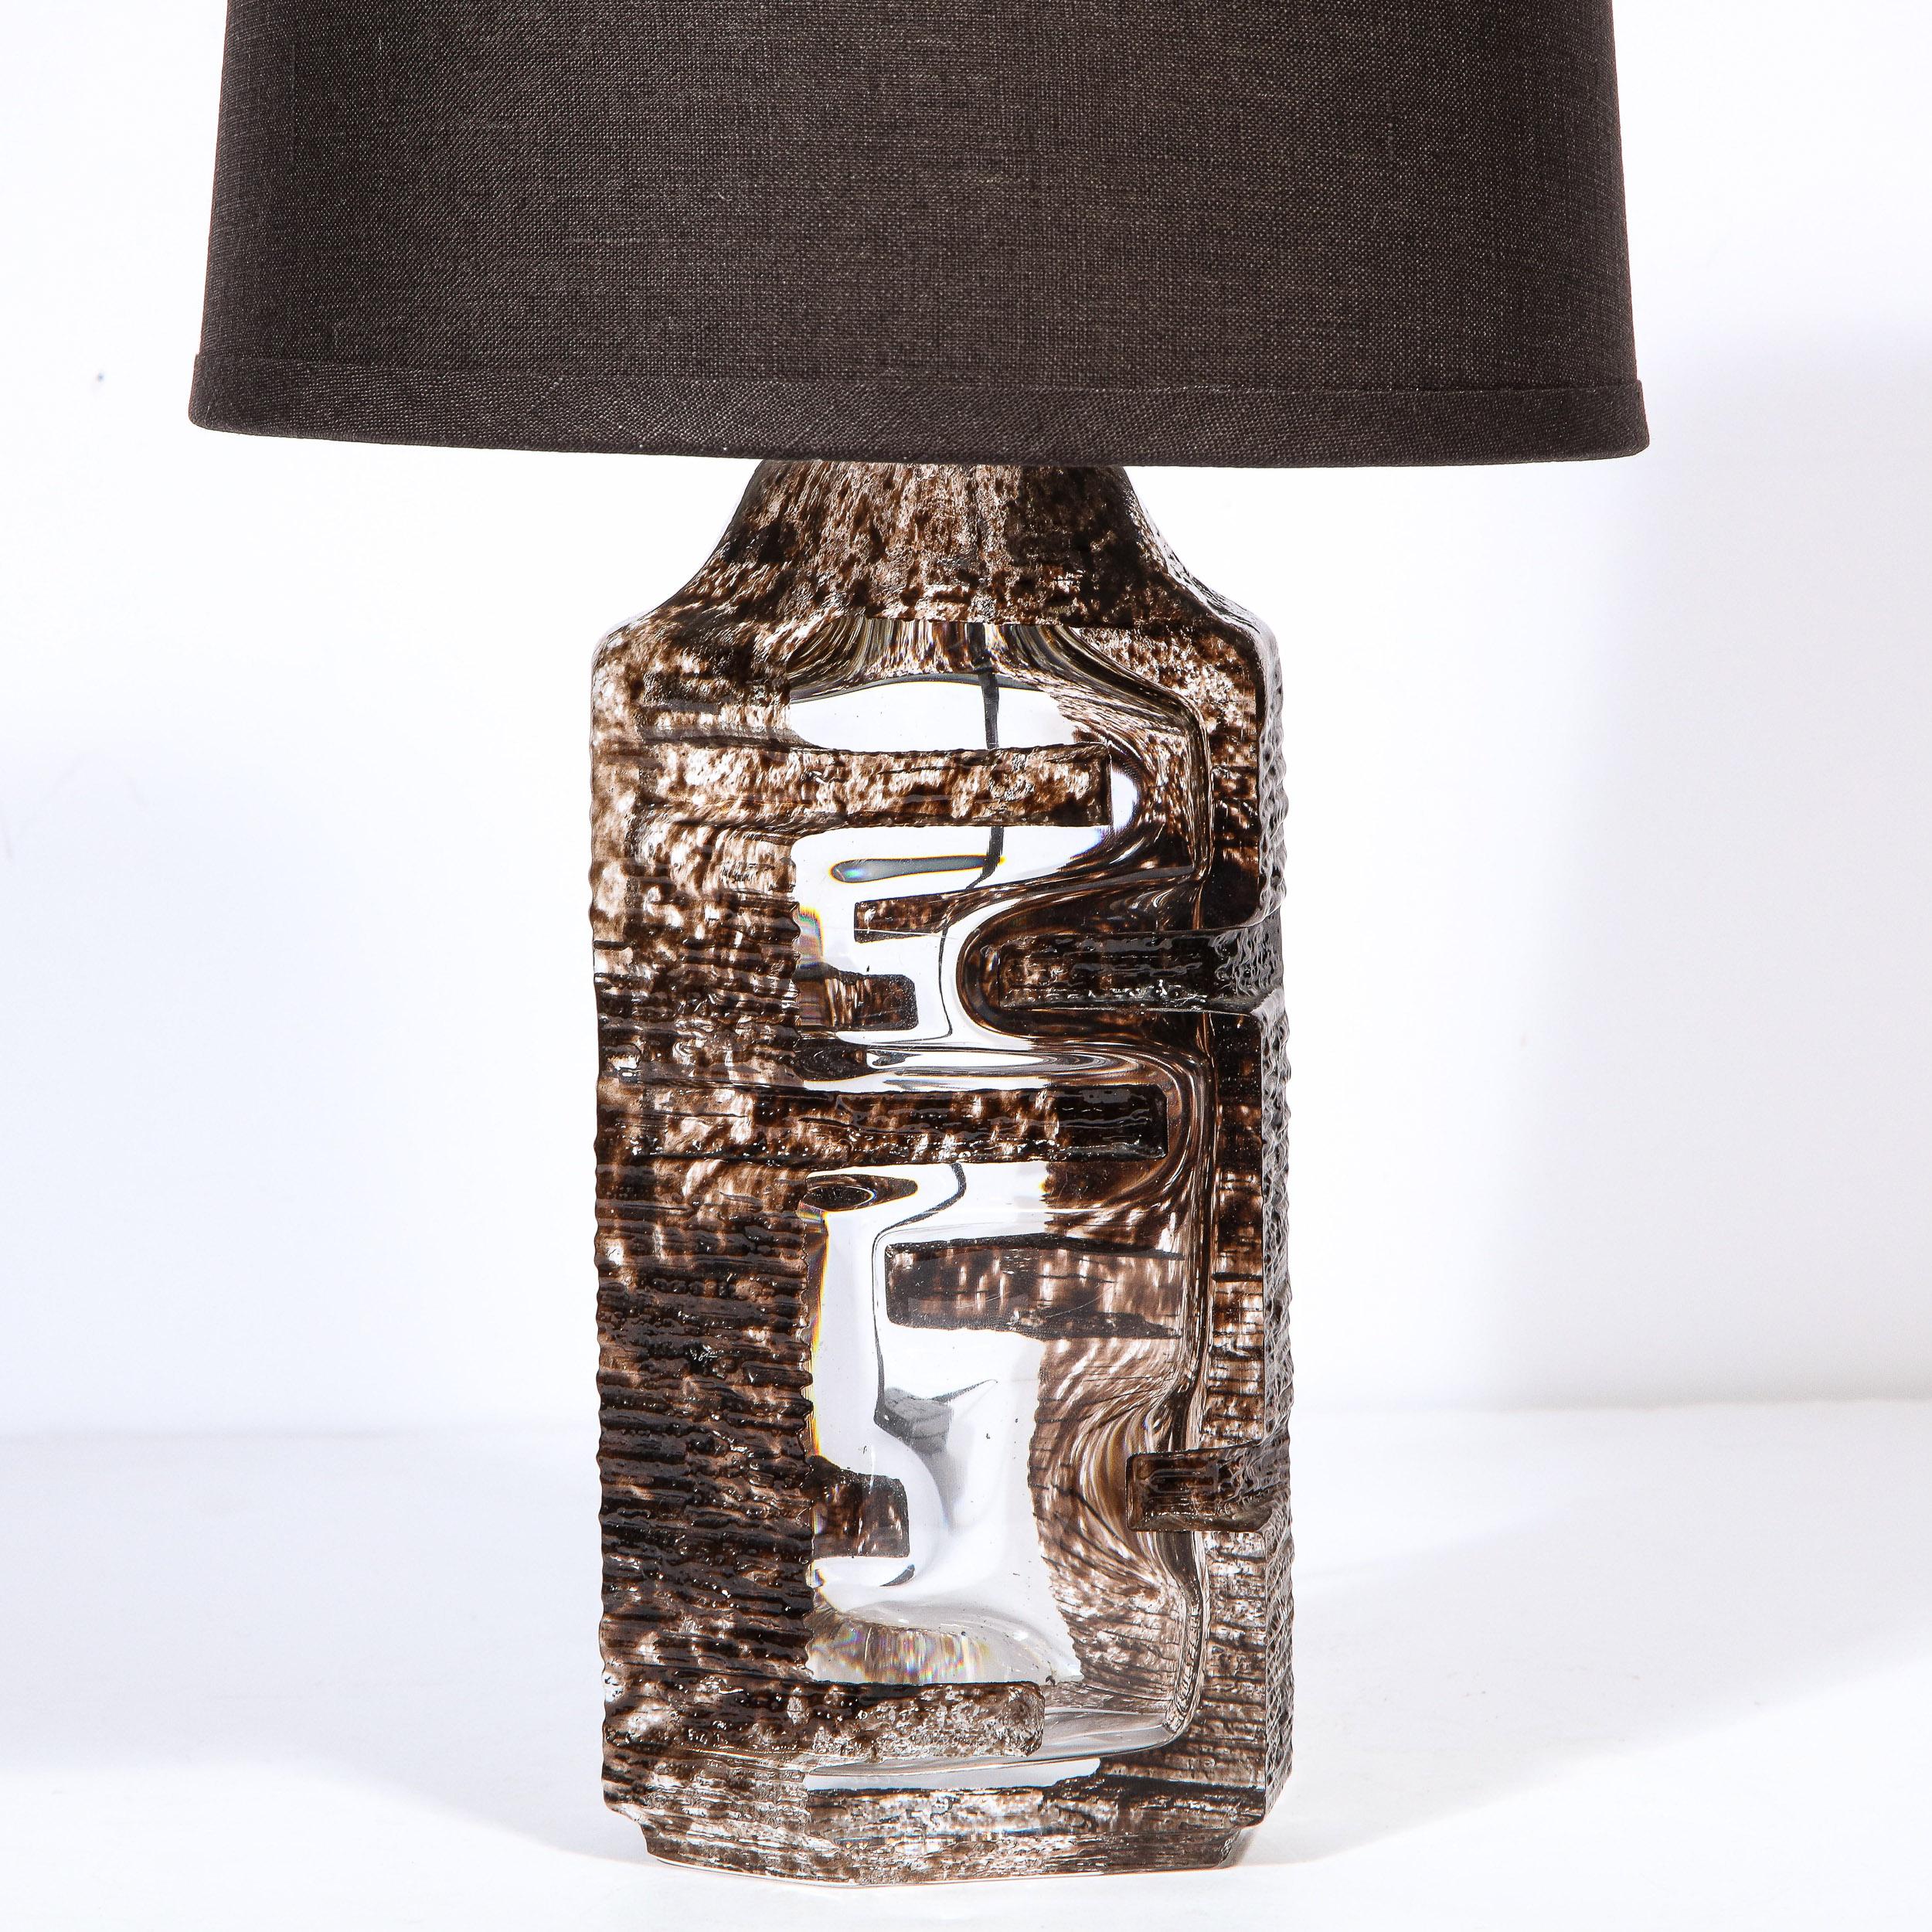 French Mid-Century Modern Brutalist Handblown Glass Table Lamp Signed Daum